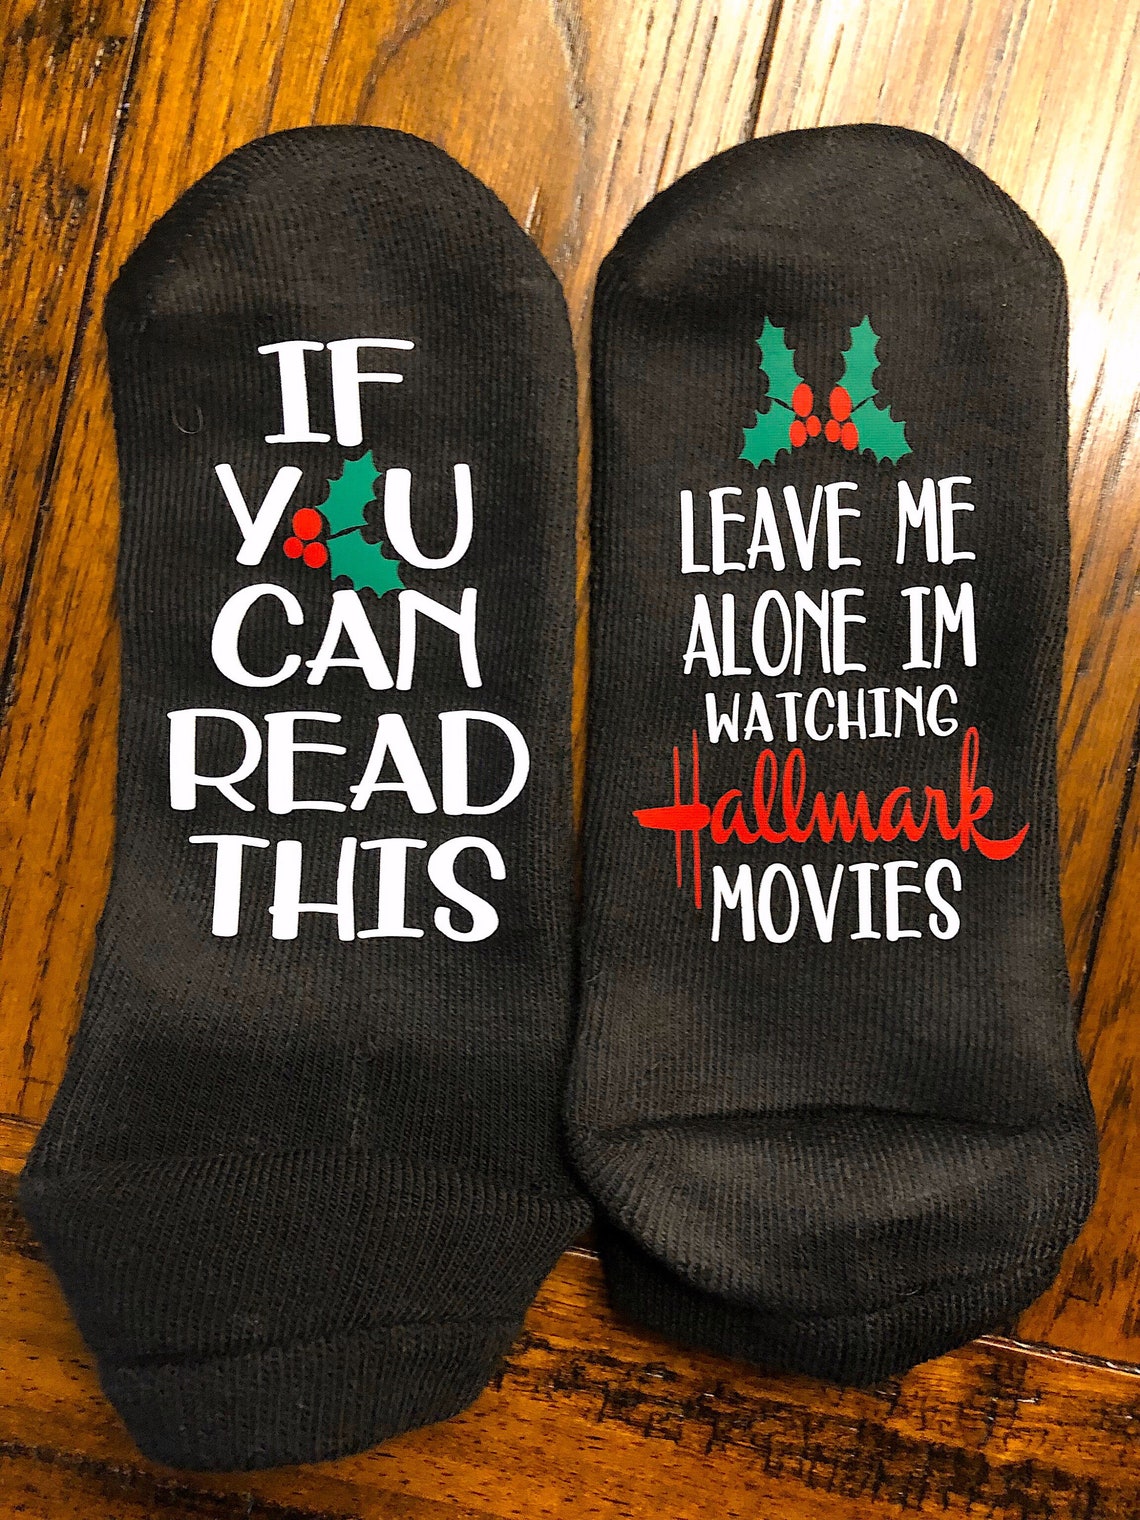 Christmas movie socks If you can read this Hallmark Socks | Etsy